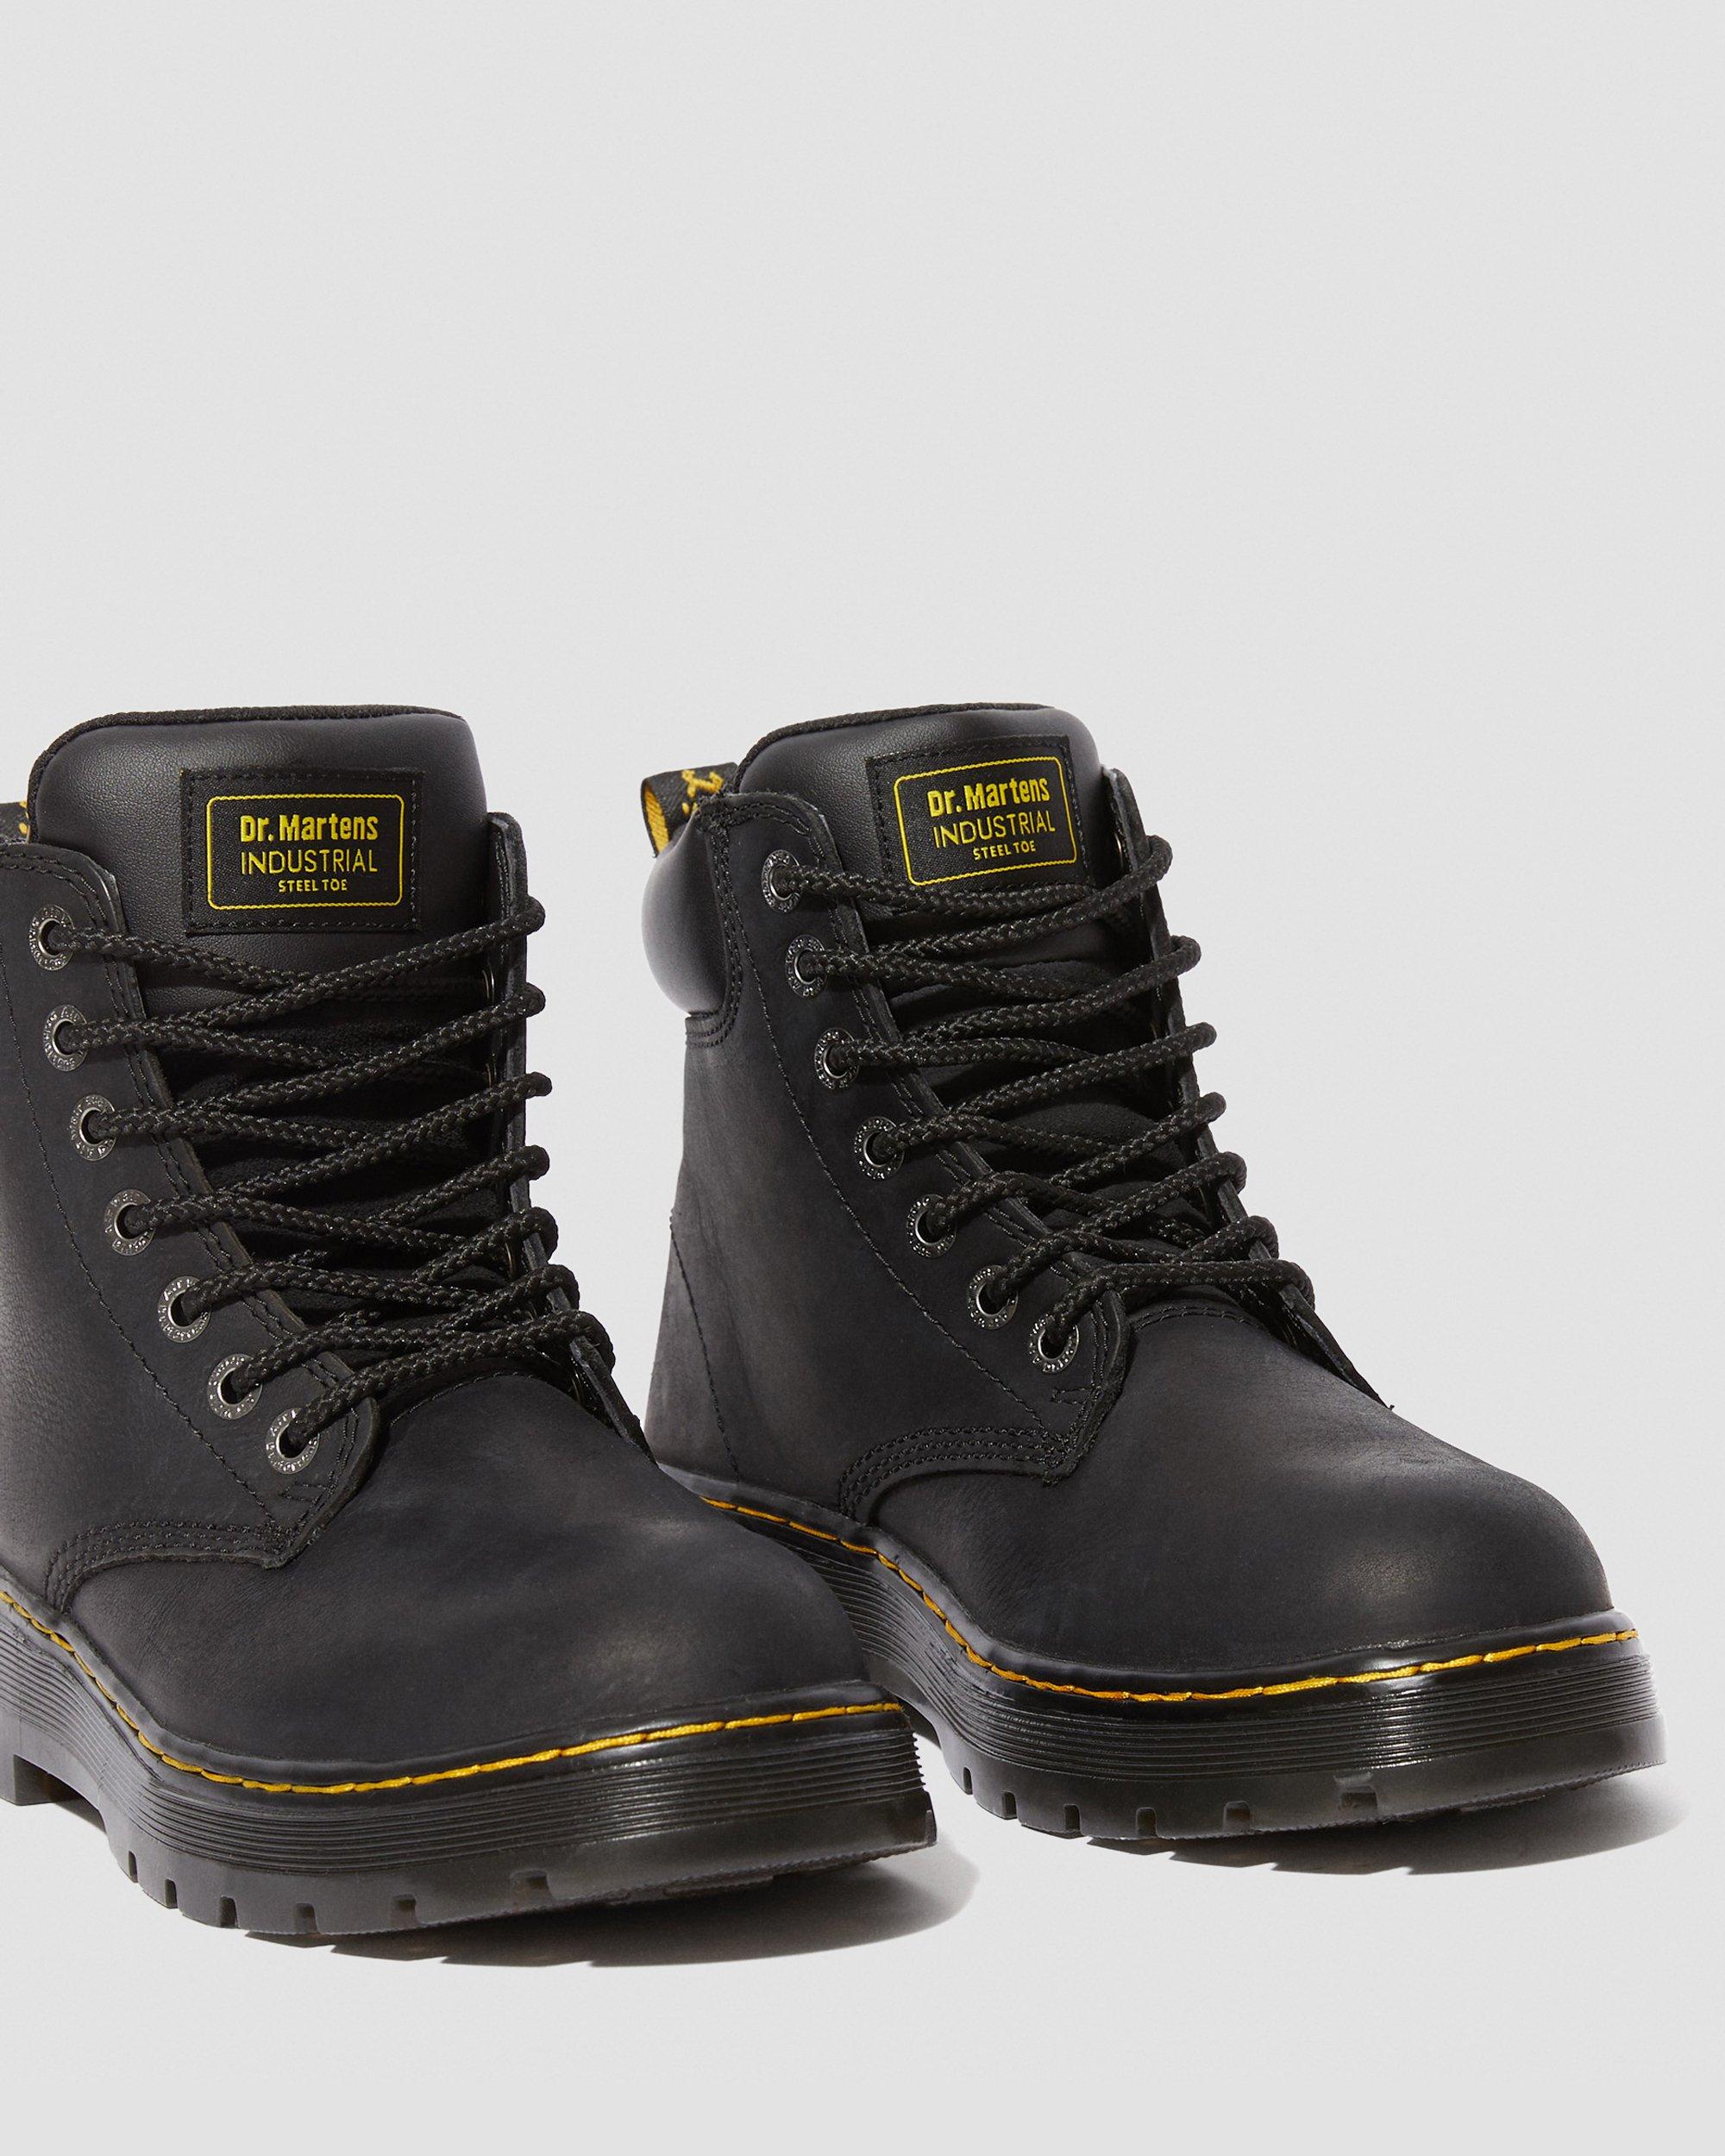 Dr Mens Winch Steel Toe Light Industry Boots 15 M US Martens Dark Brown 